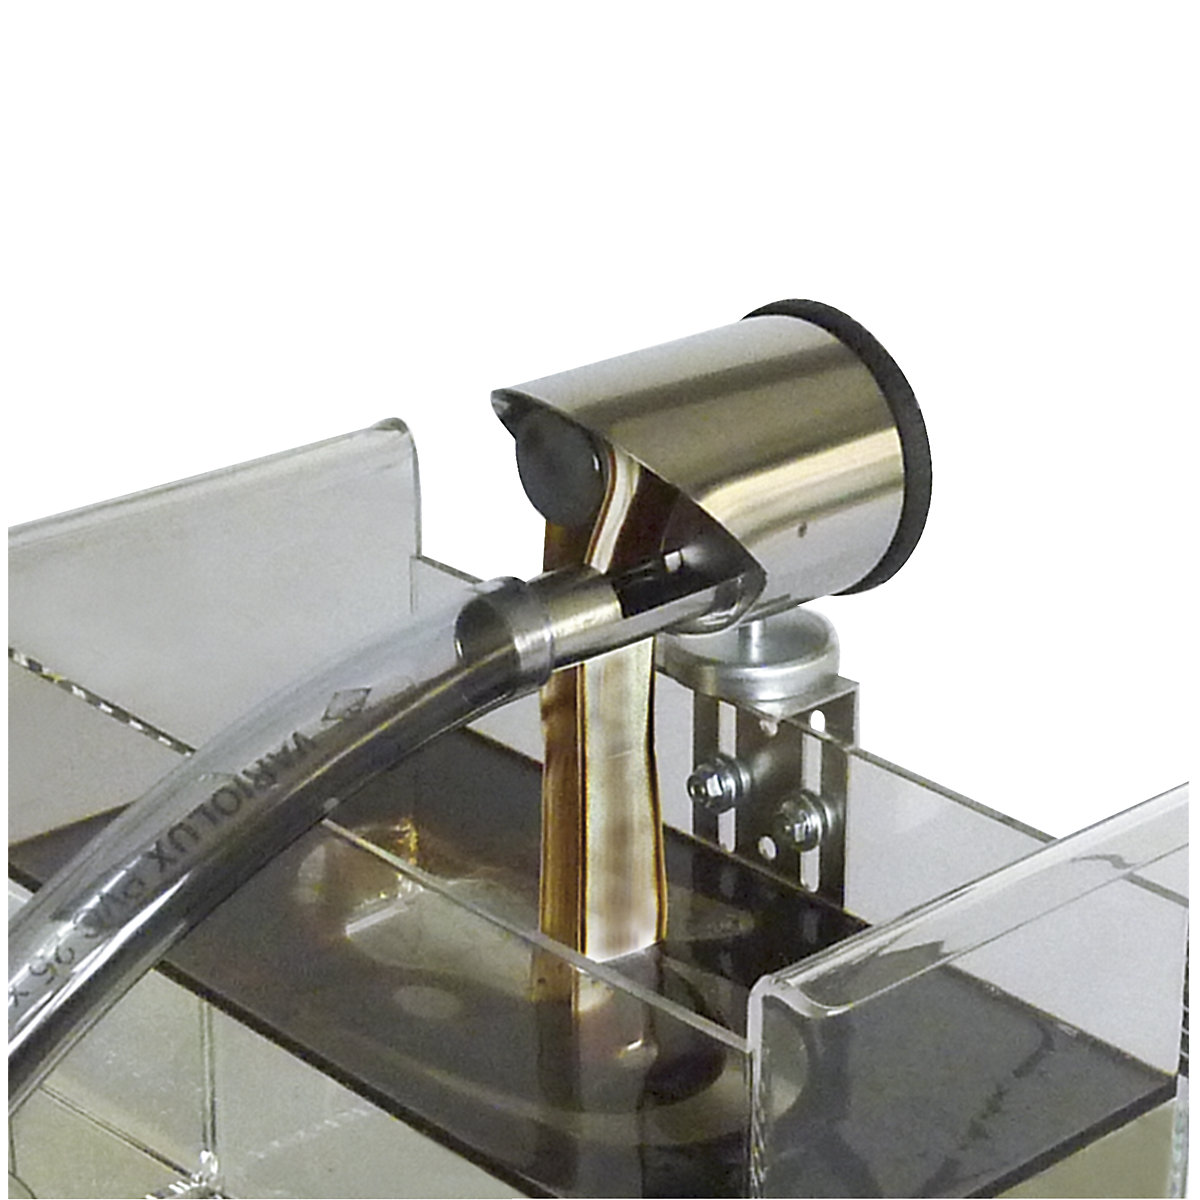 Band-olieskimmer met magneetvoet (Productafbeelding 2)-1